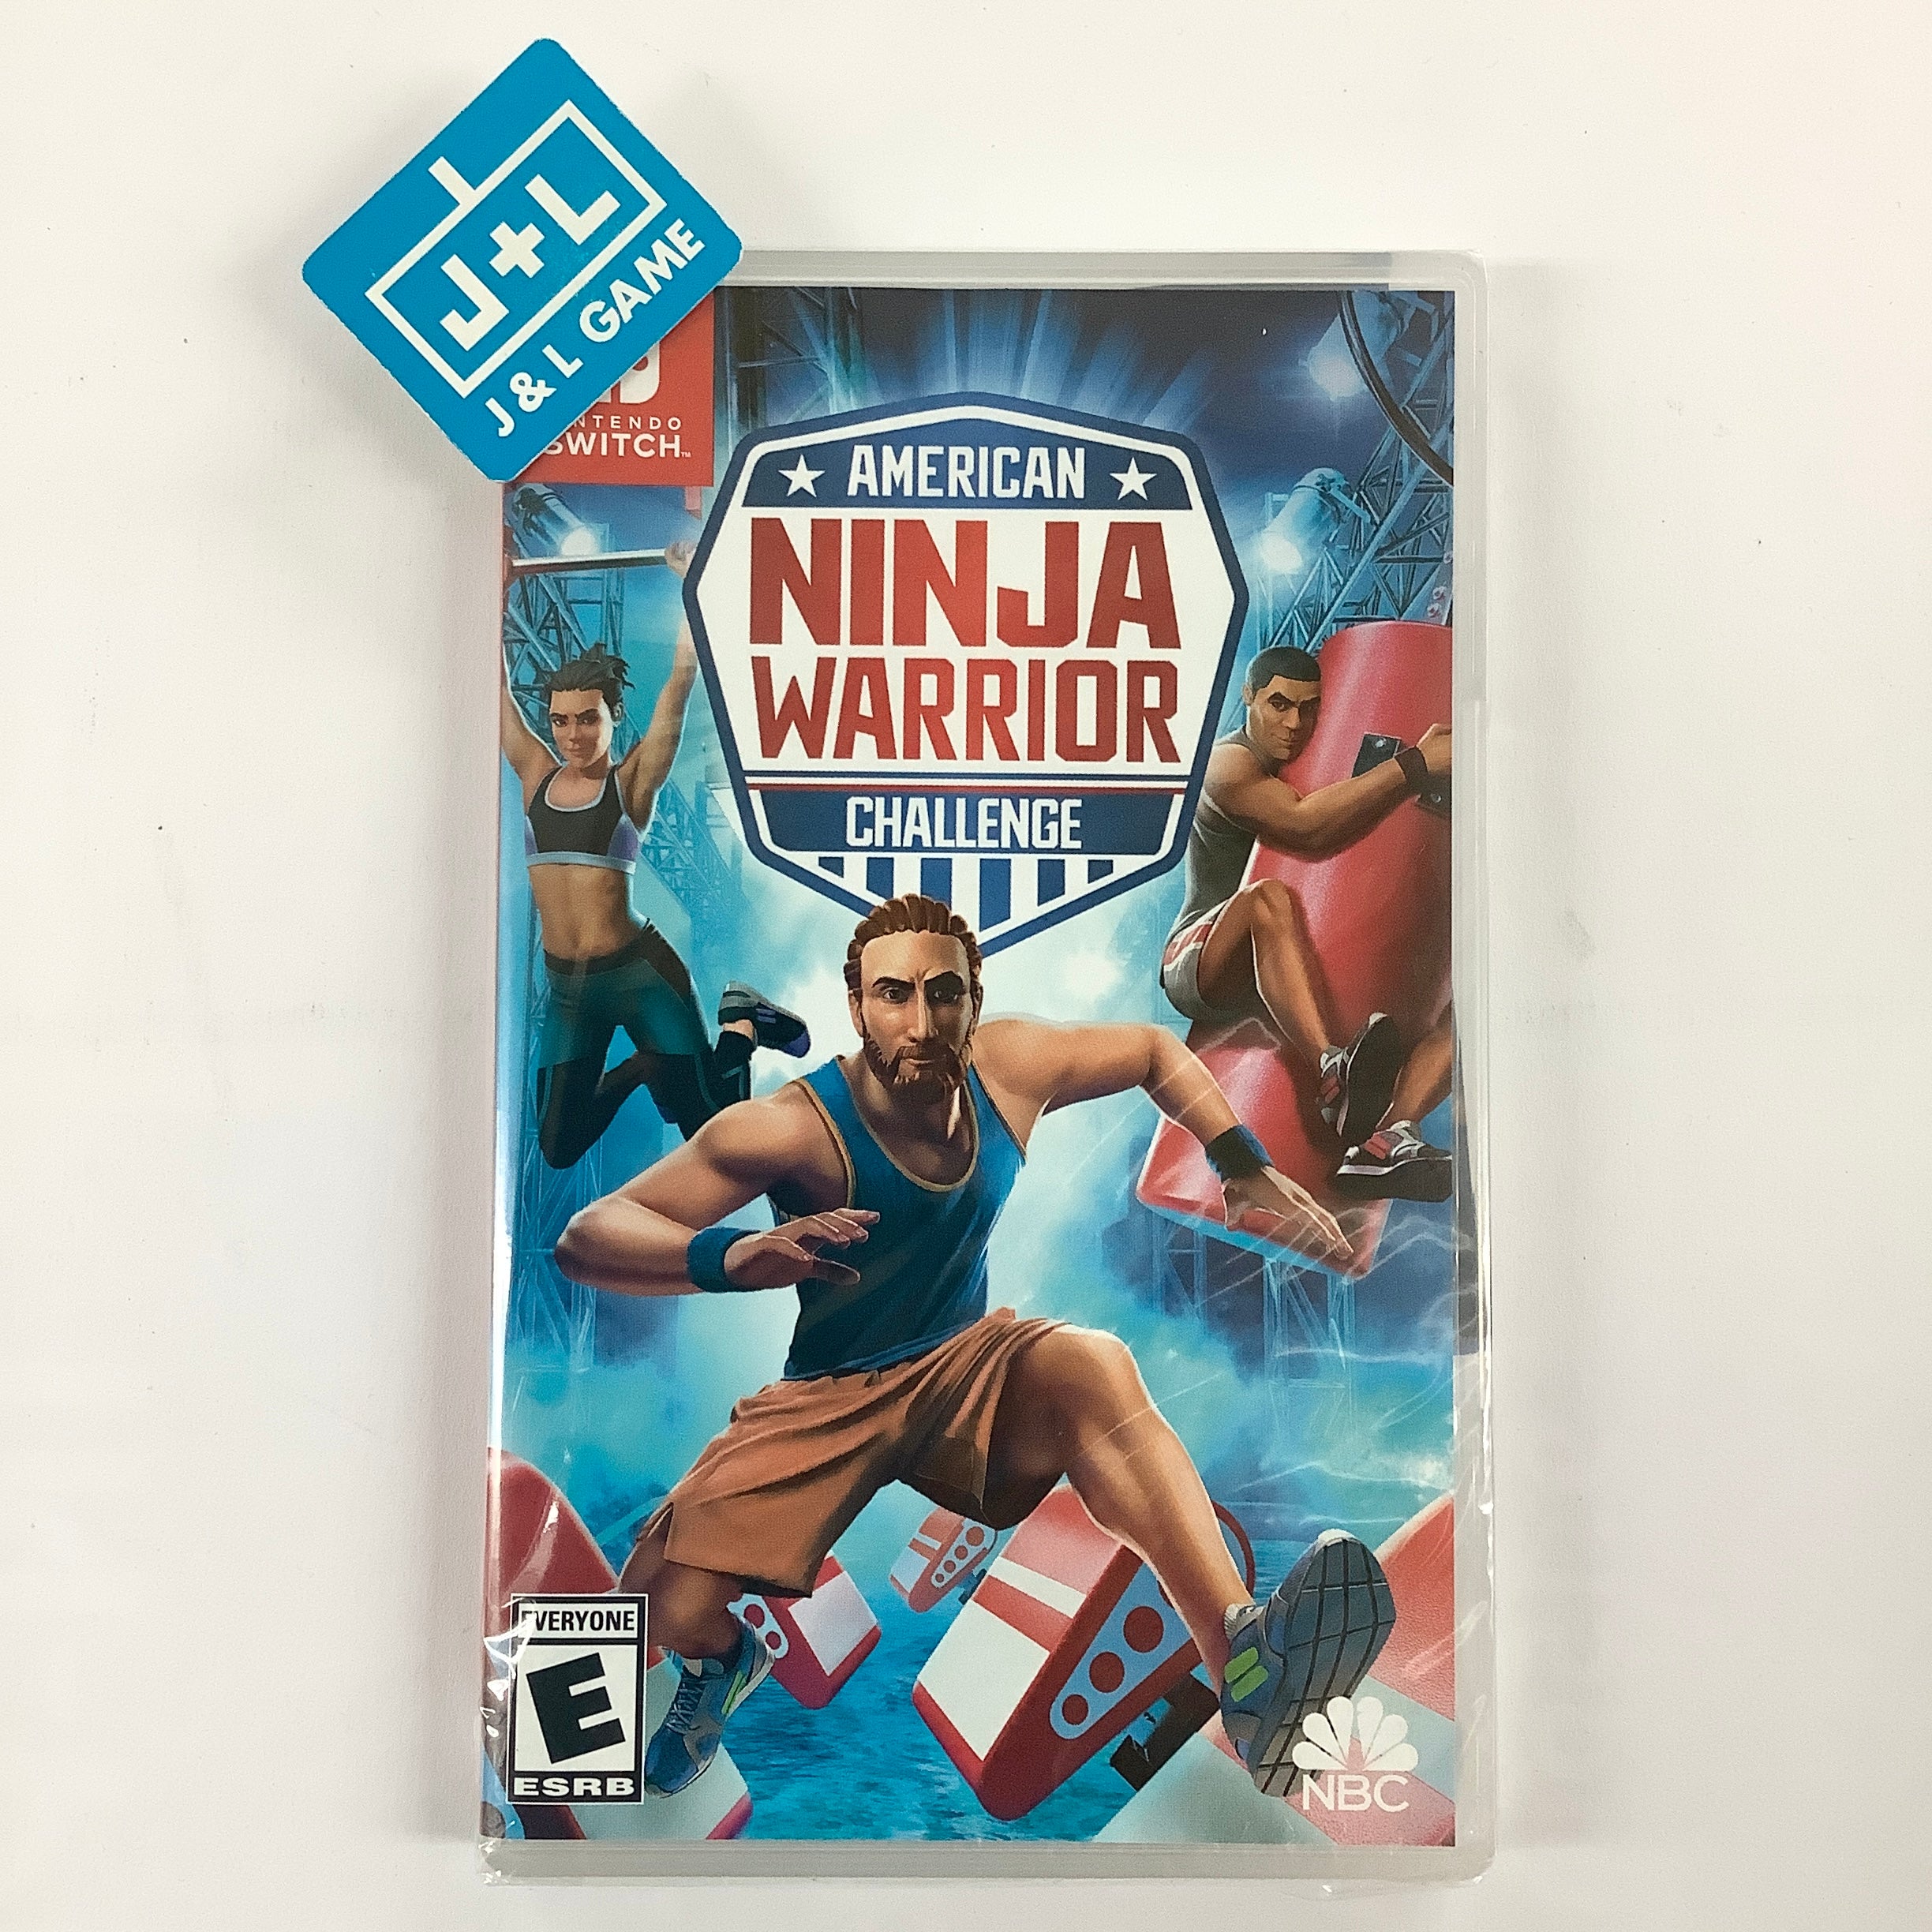 American Ninja Warrior Challenge - (NSW) Nintendo Switch Video Games GameMill Entertainment   